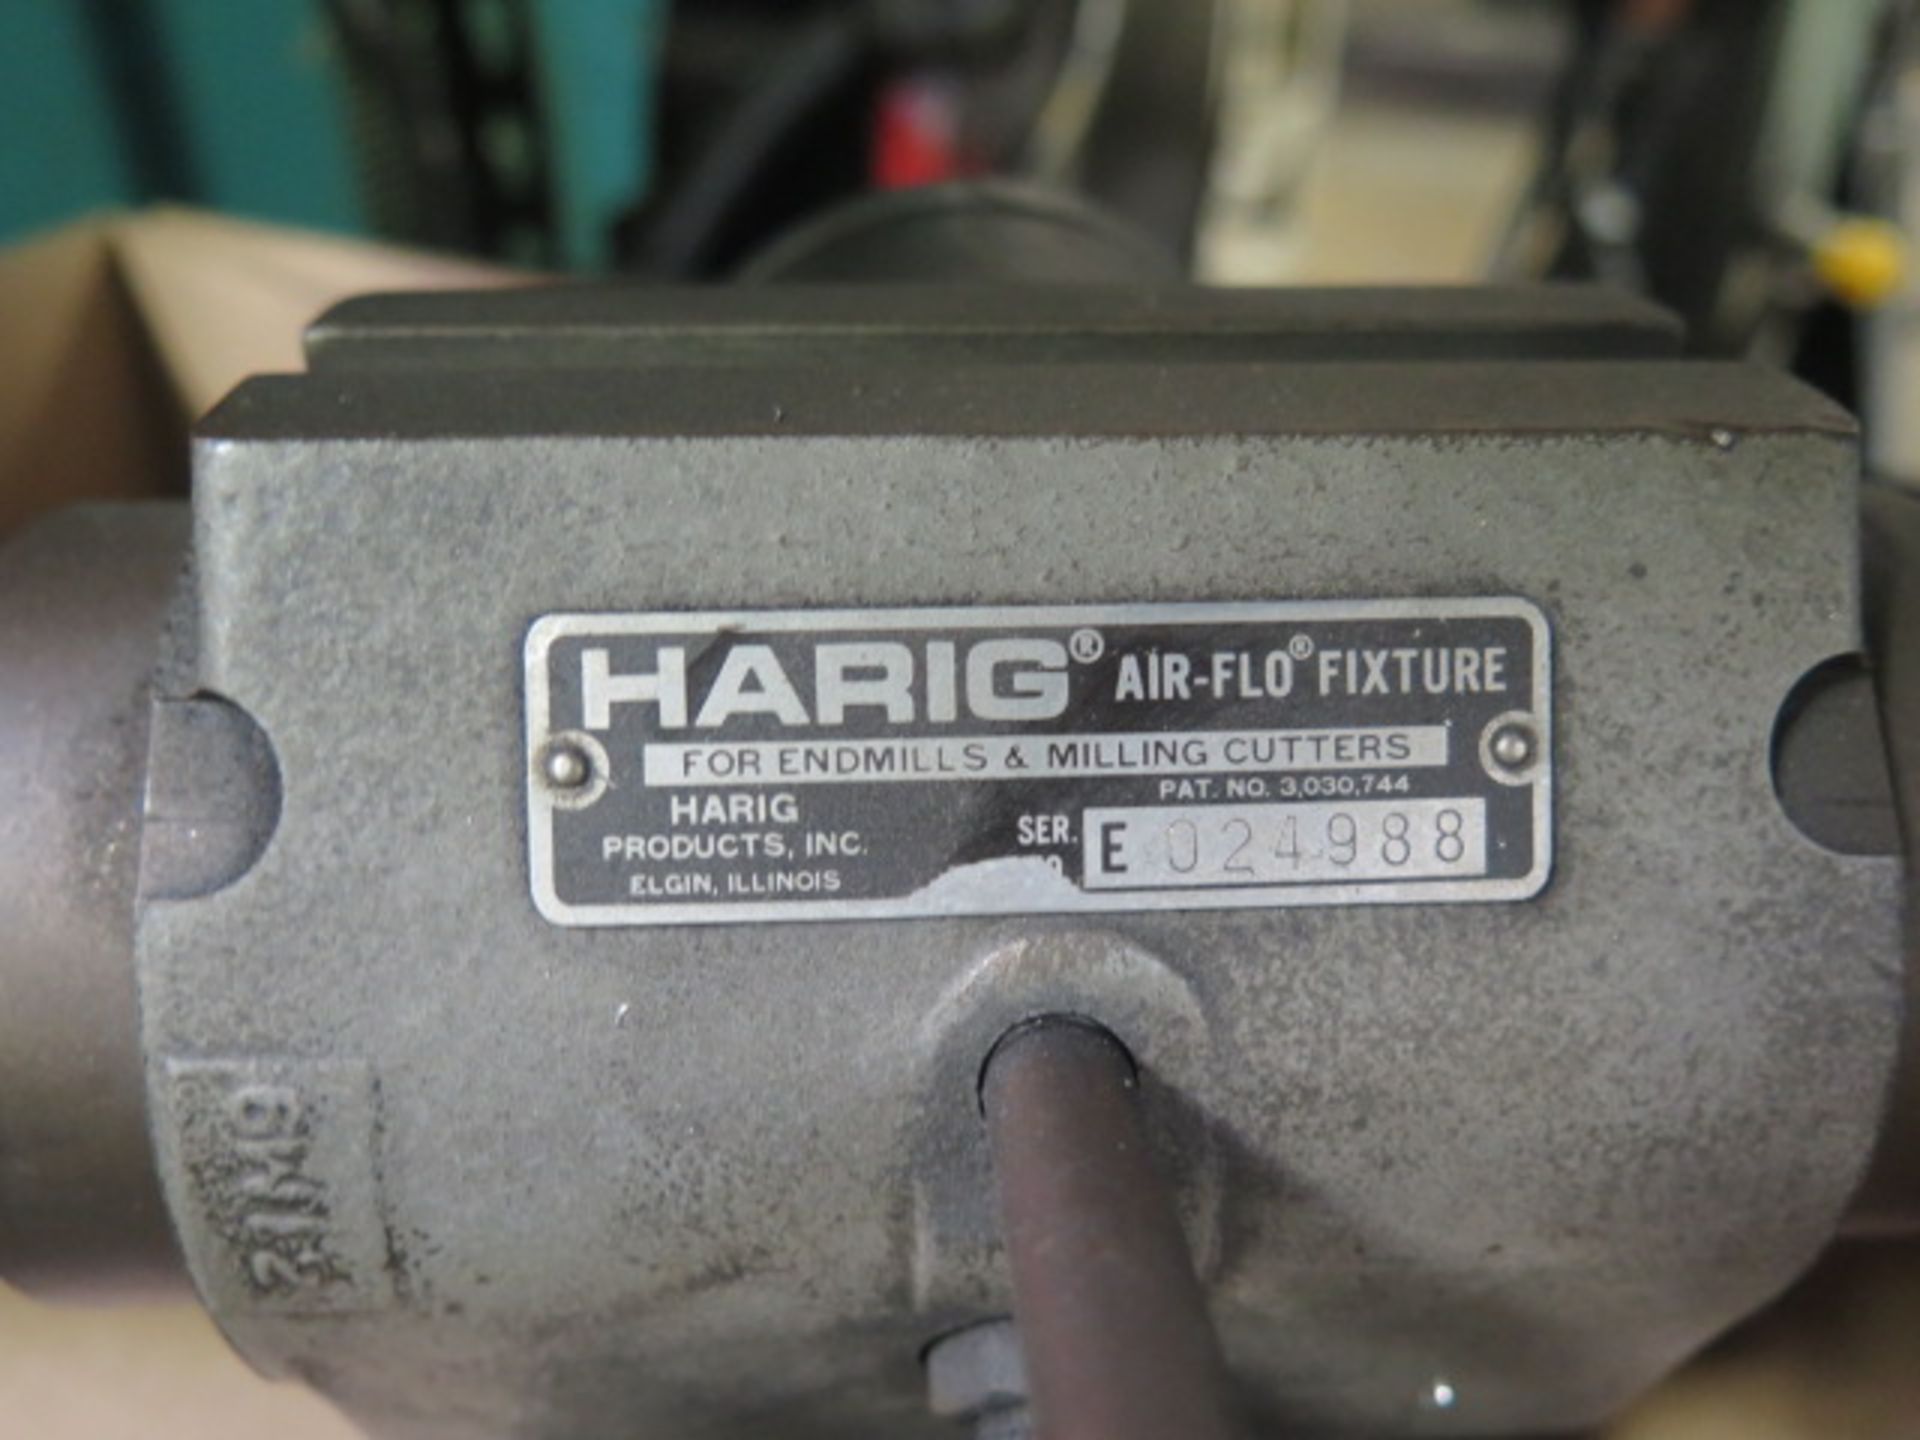 Harig 5C Aor-Flo Fixture (SOLD AS-IS - NO WARRANTY) - Image 4 of 4